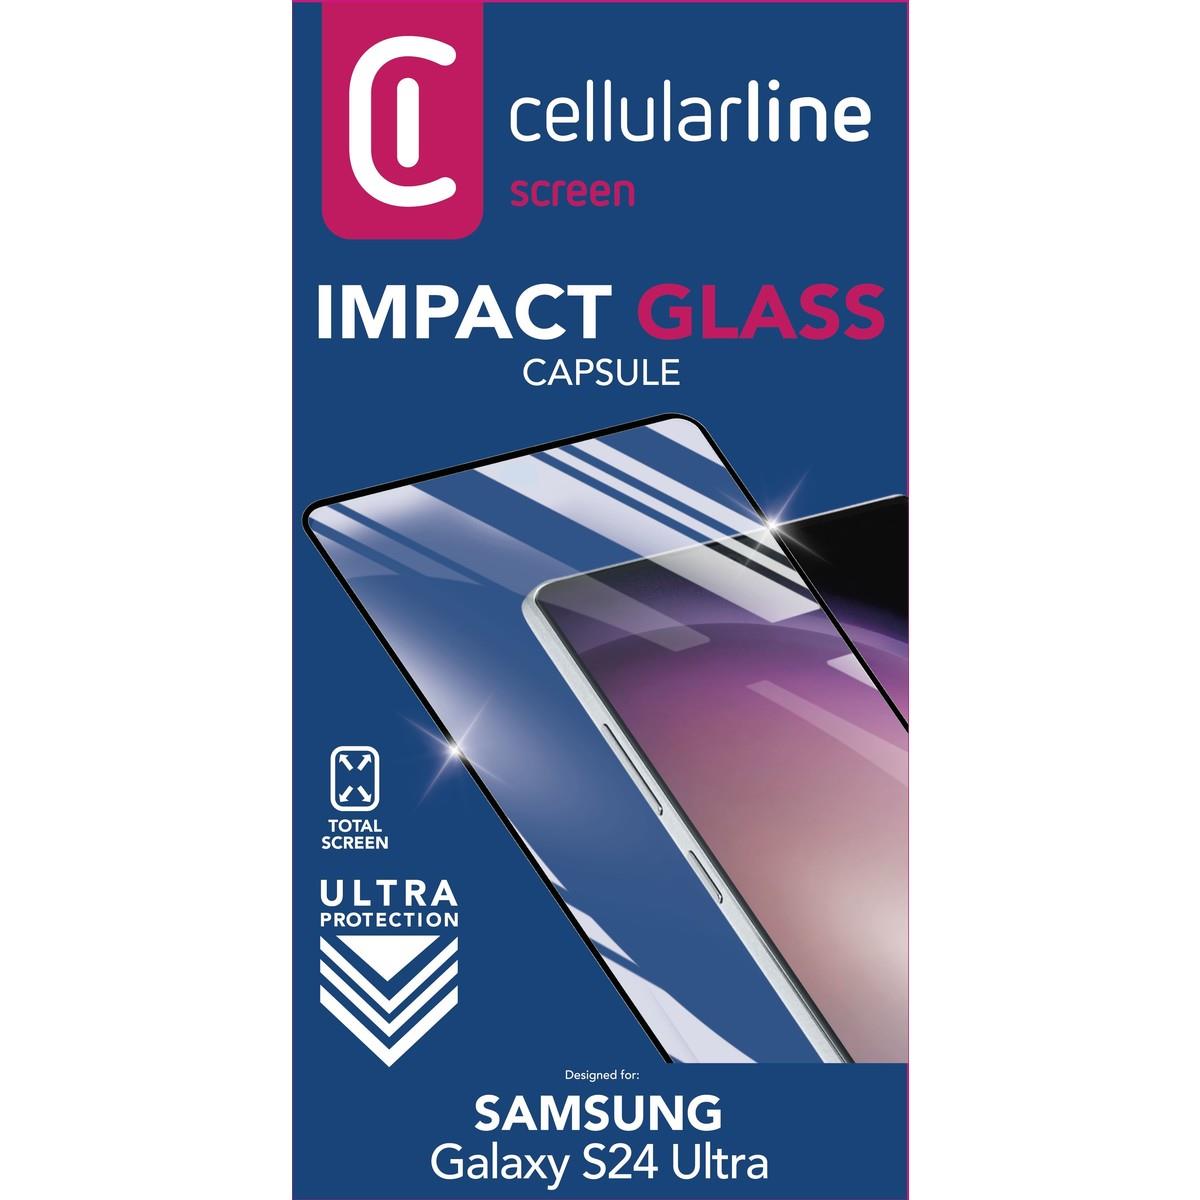 Schutzglas IMPACT GLASS CAPSULE für Samsung Galaxy S24 Ultra